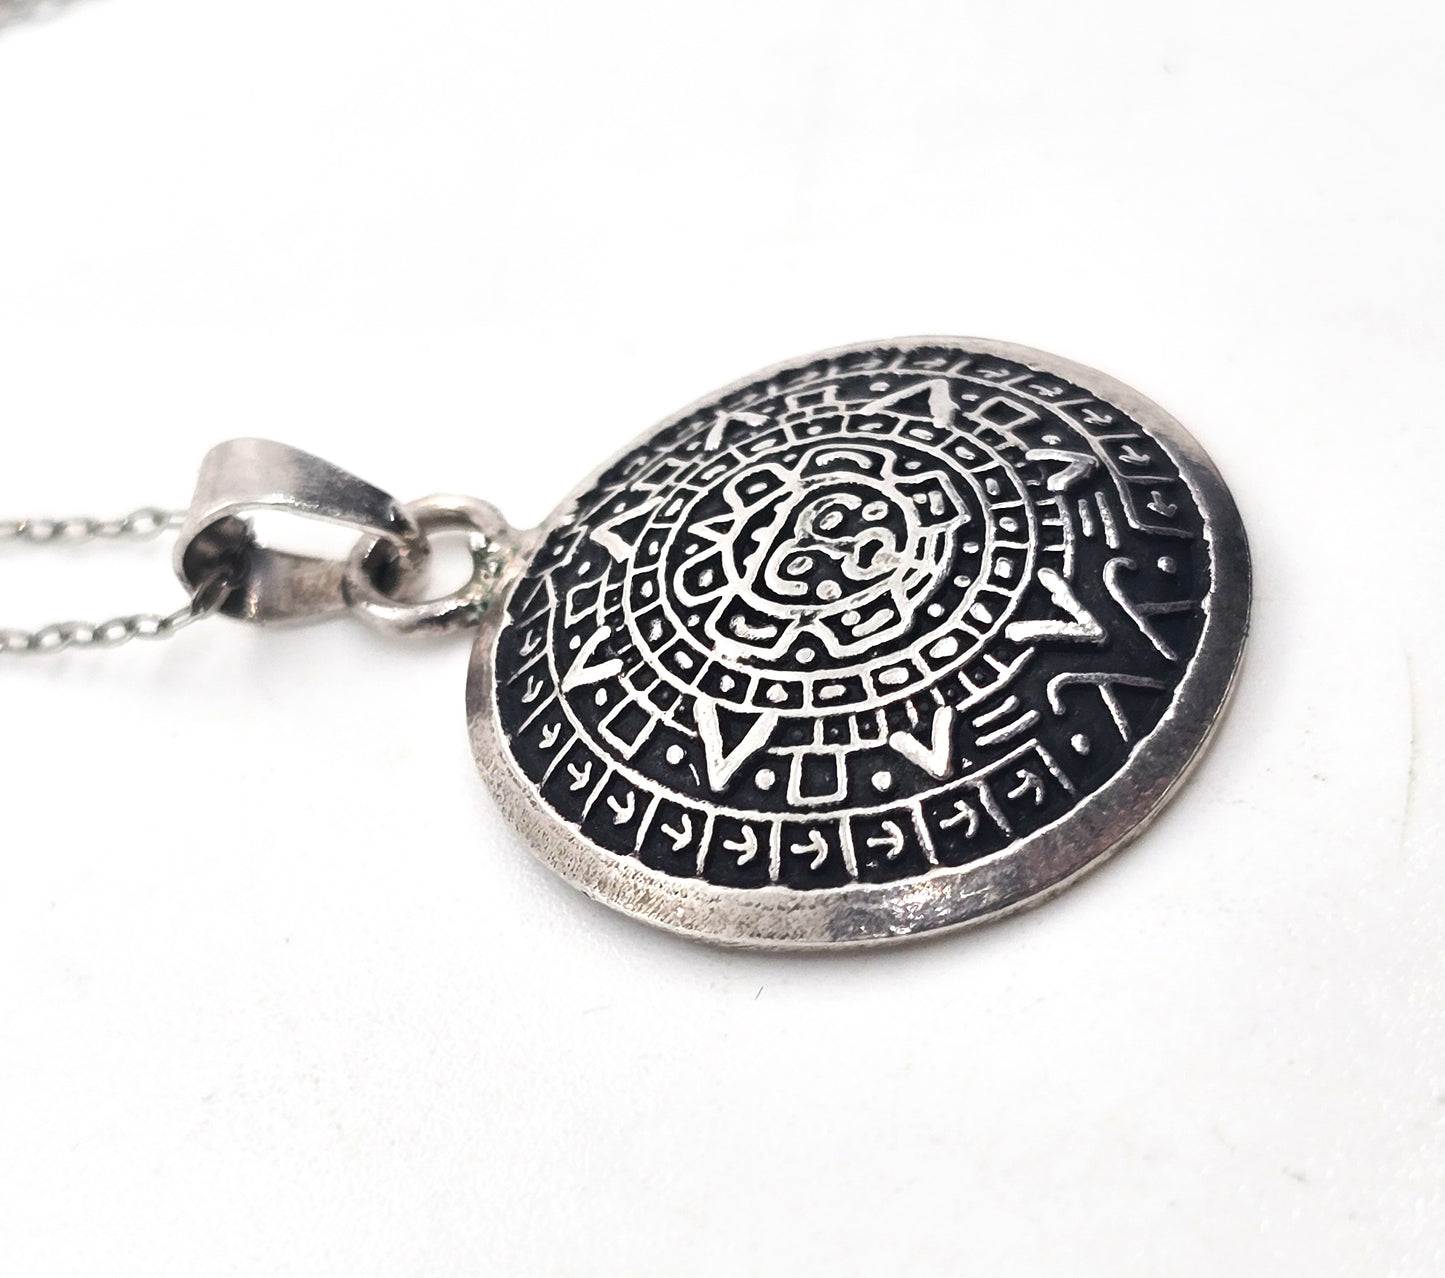 Aztec calendar Mexican vintage sterling silver medallion necklace